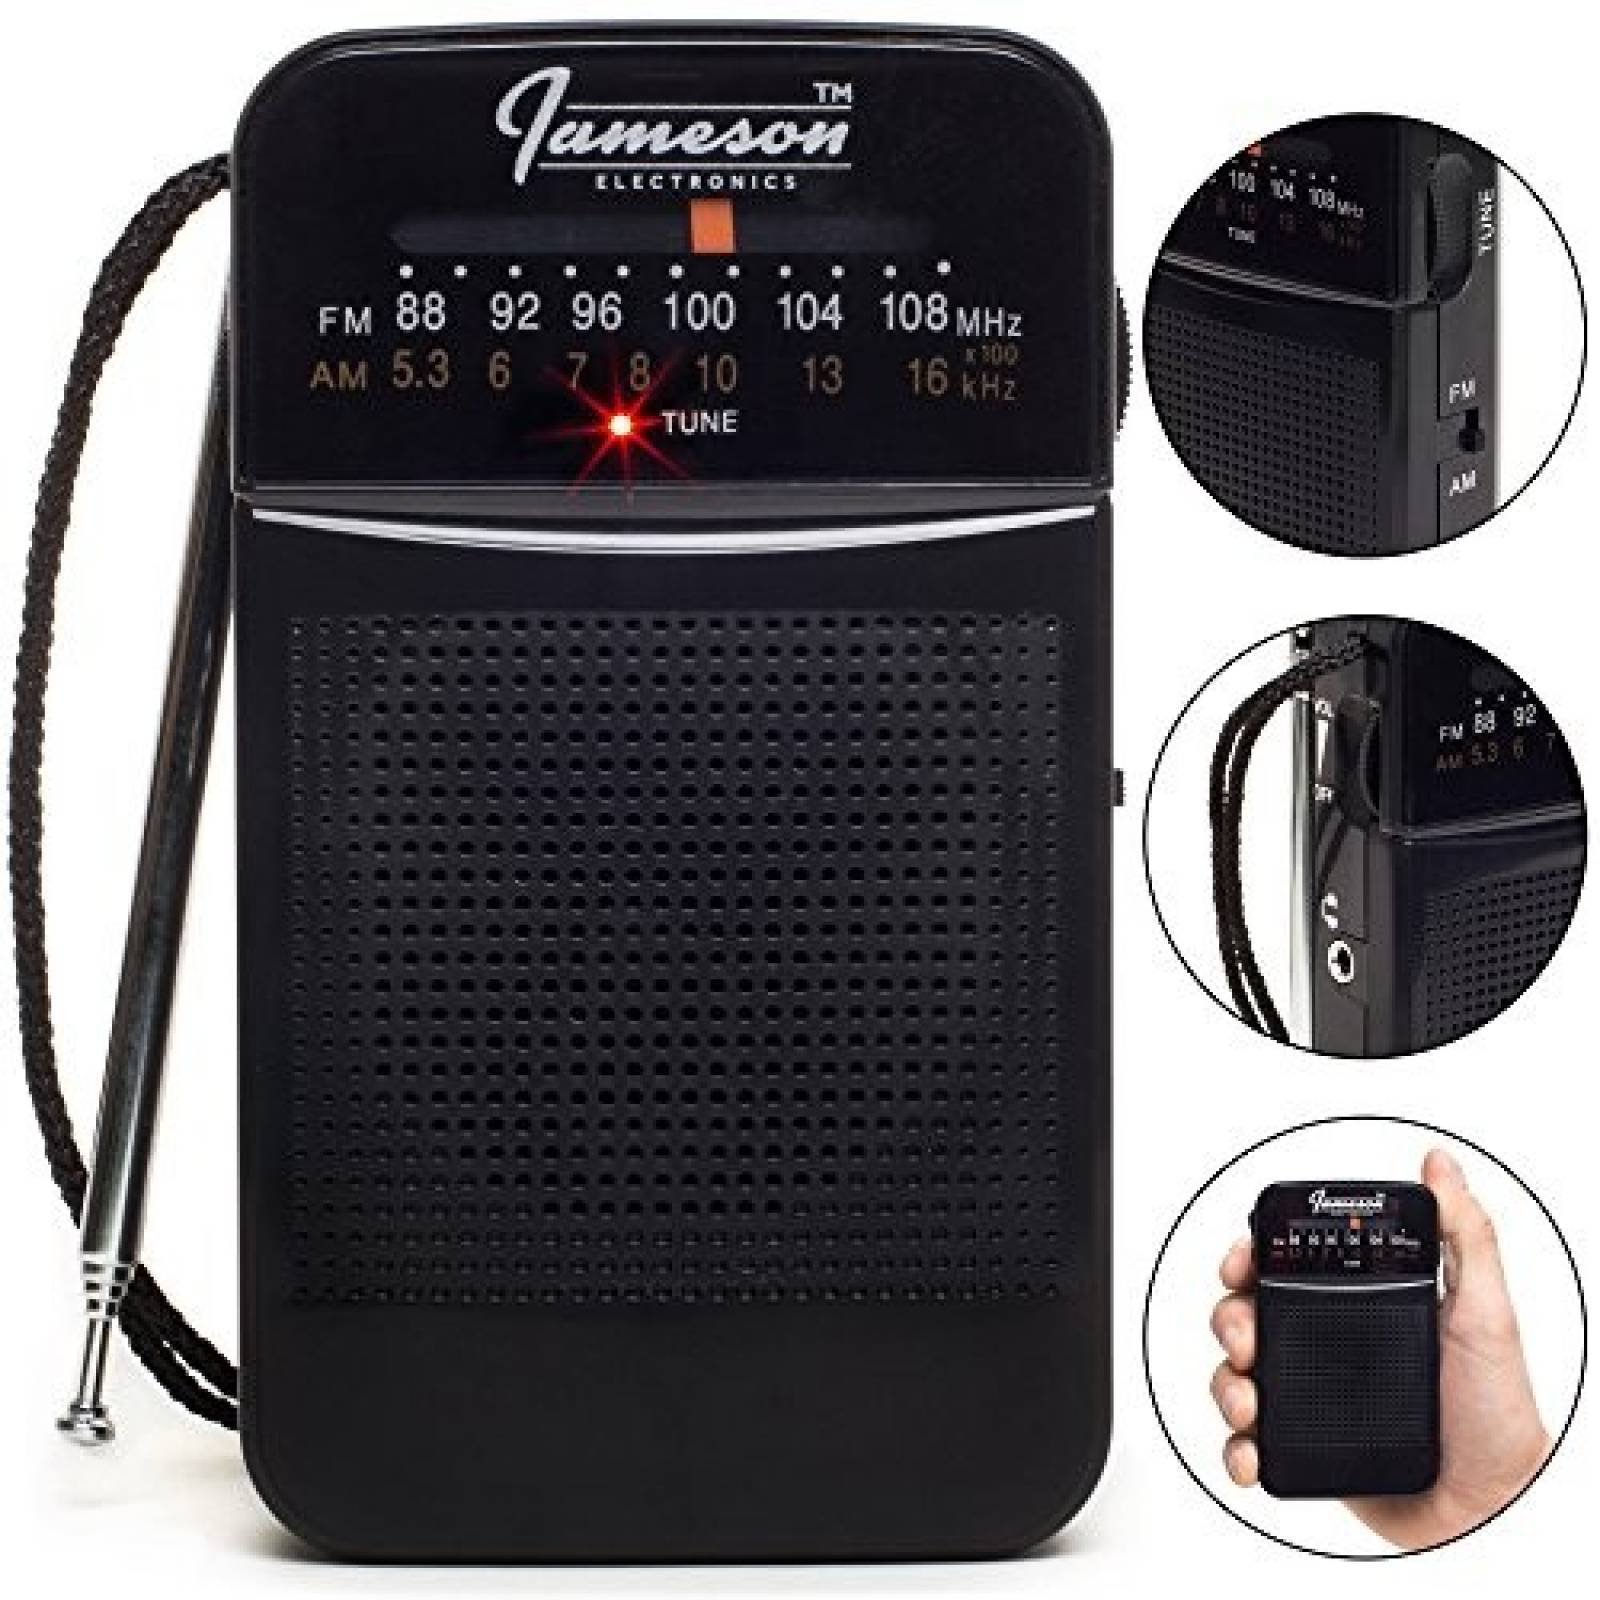 Radio personal Jameson Electronics AM FM portátil -Negro